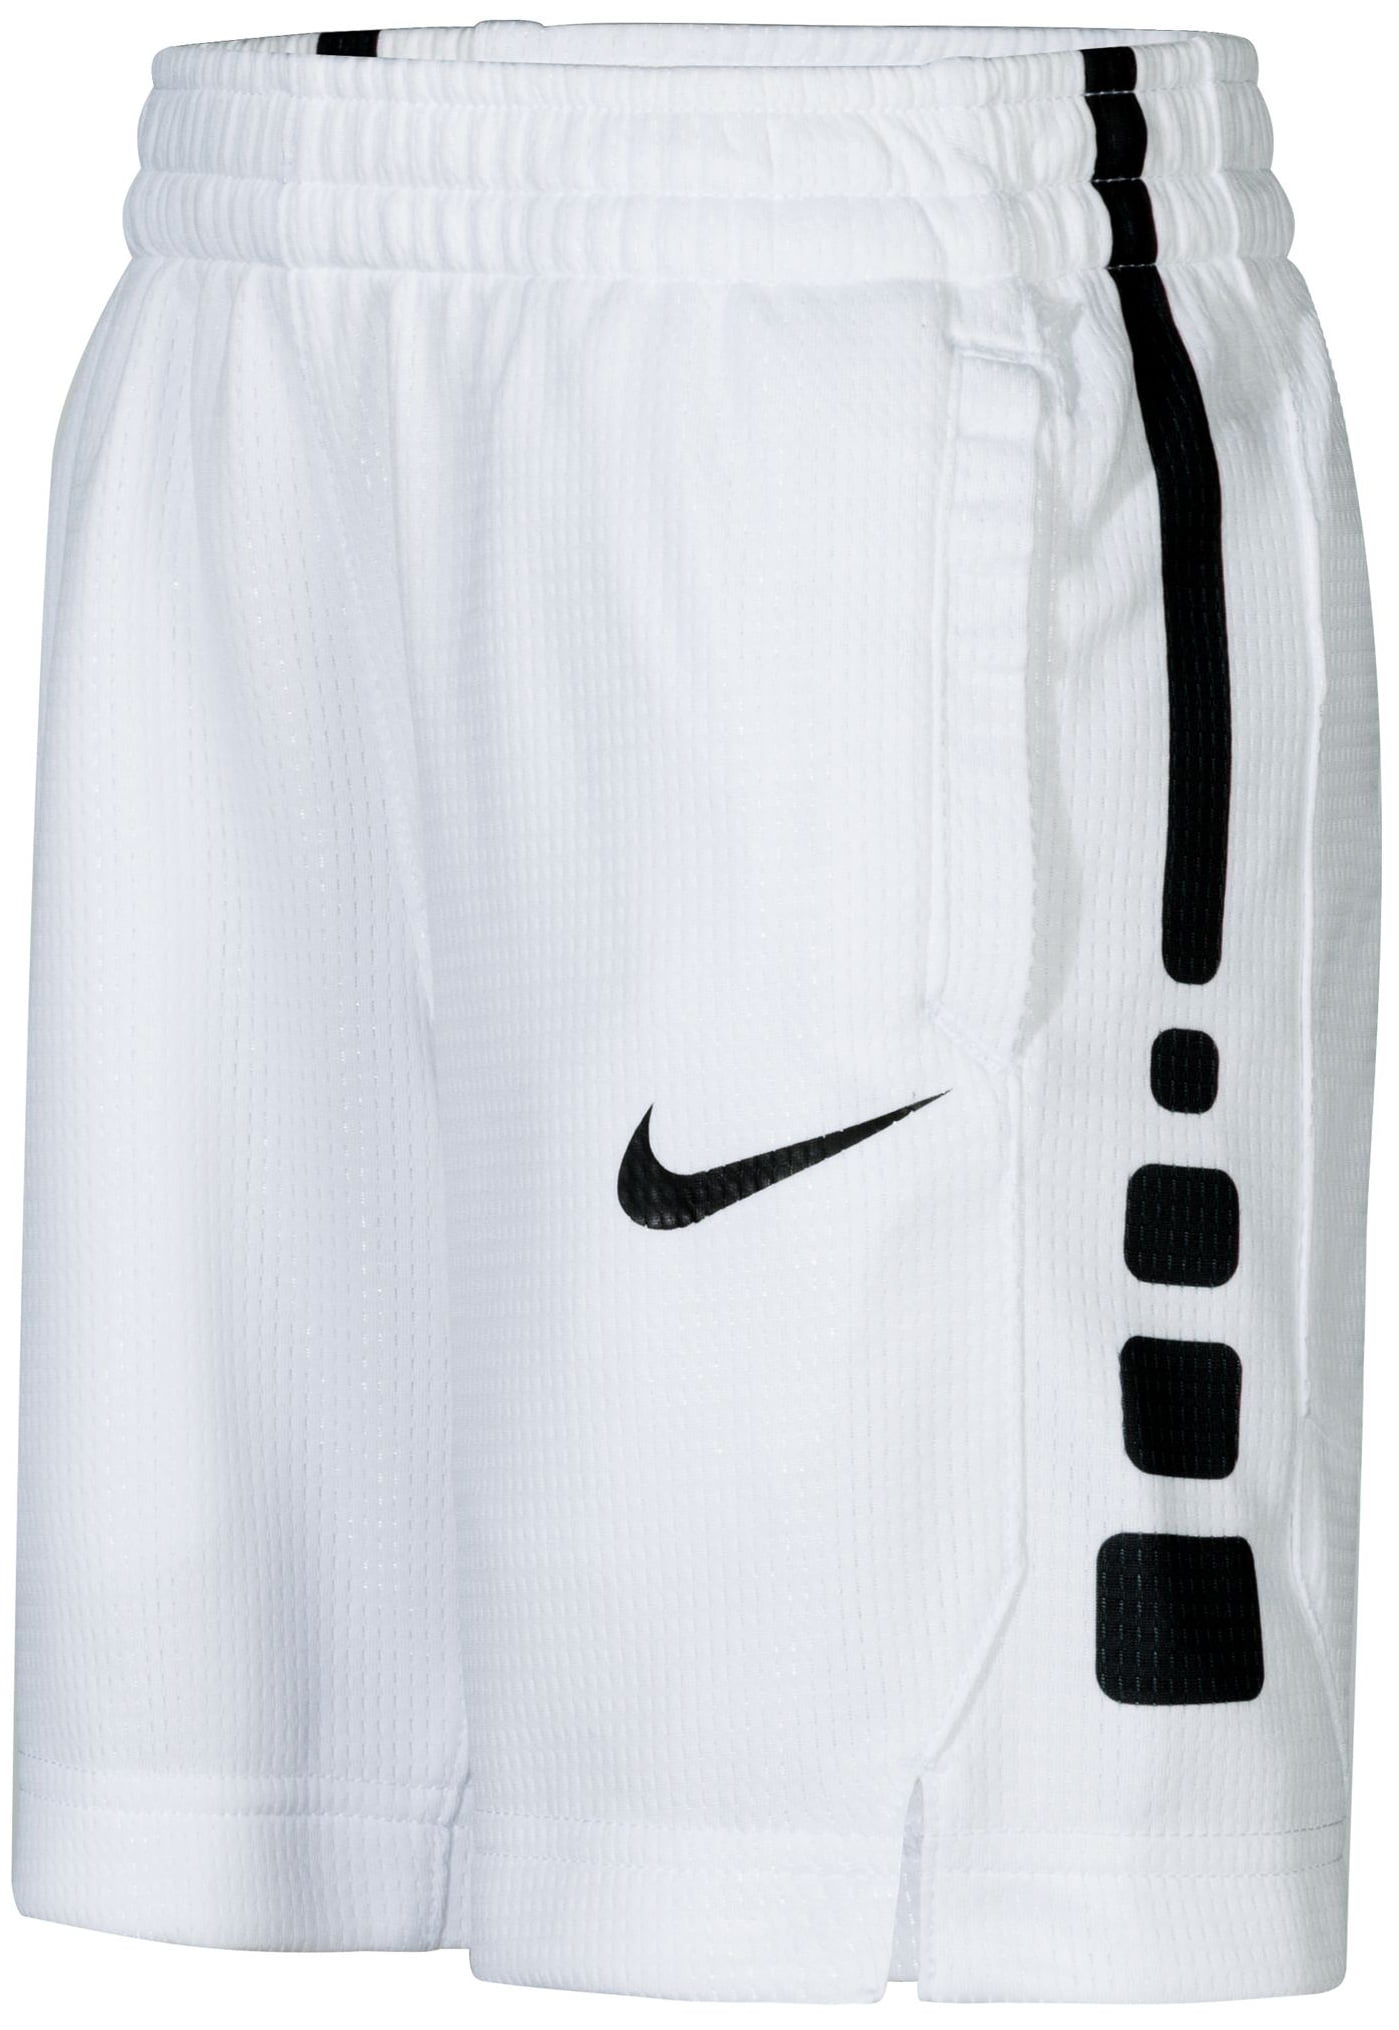 Nike - Nike Boys' Toddler Elite Stripe Shorts (White, 2T) - Walmart.com ...